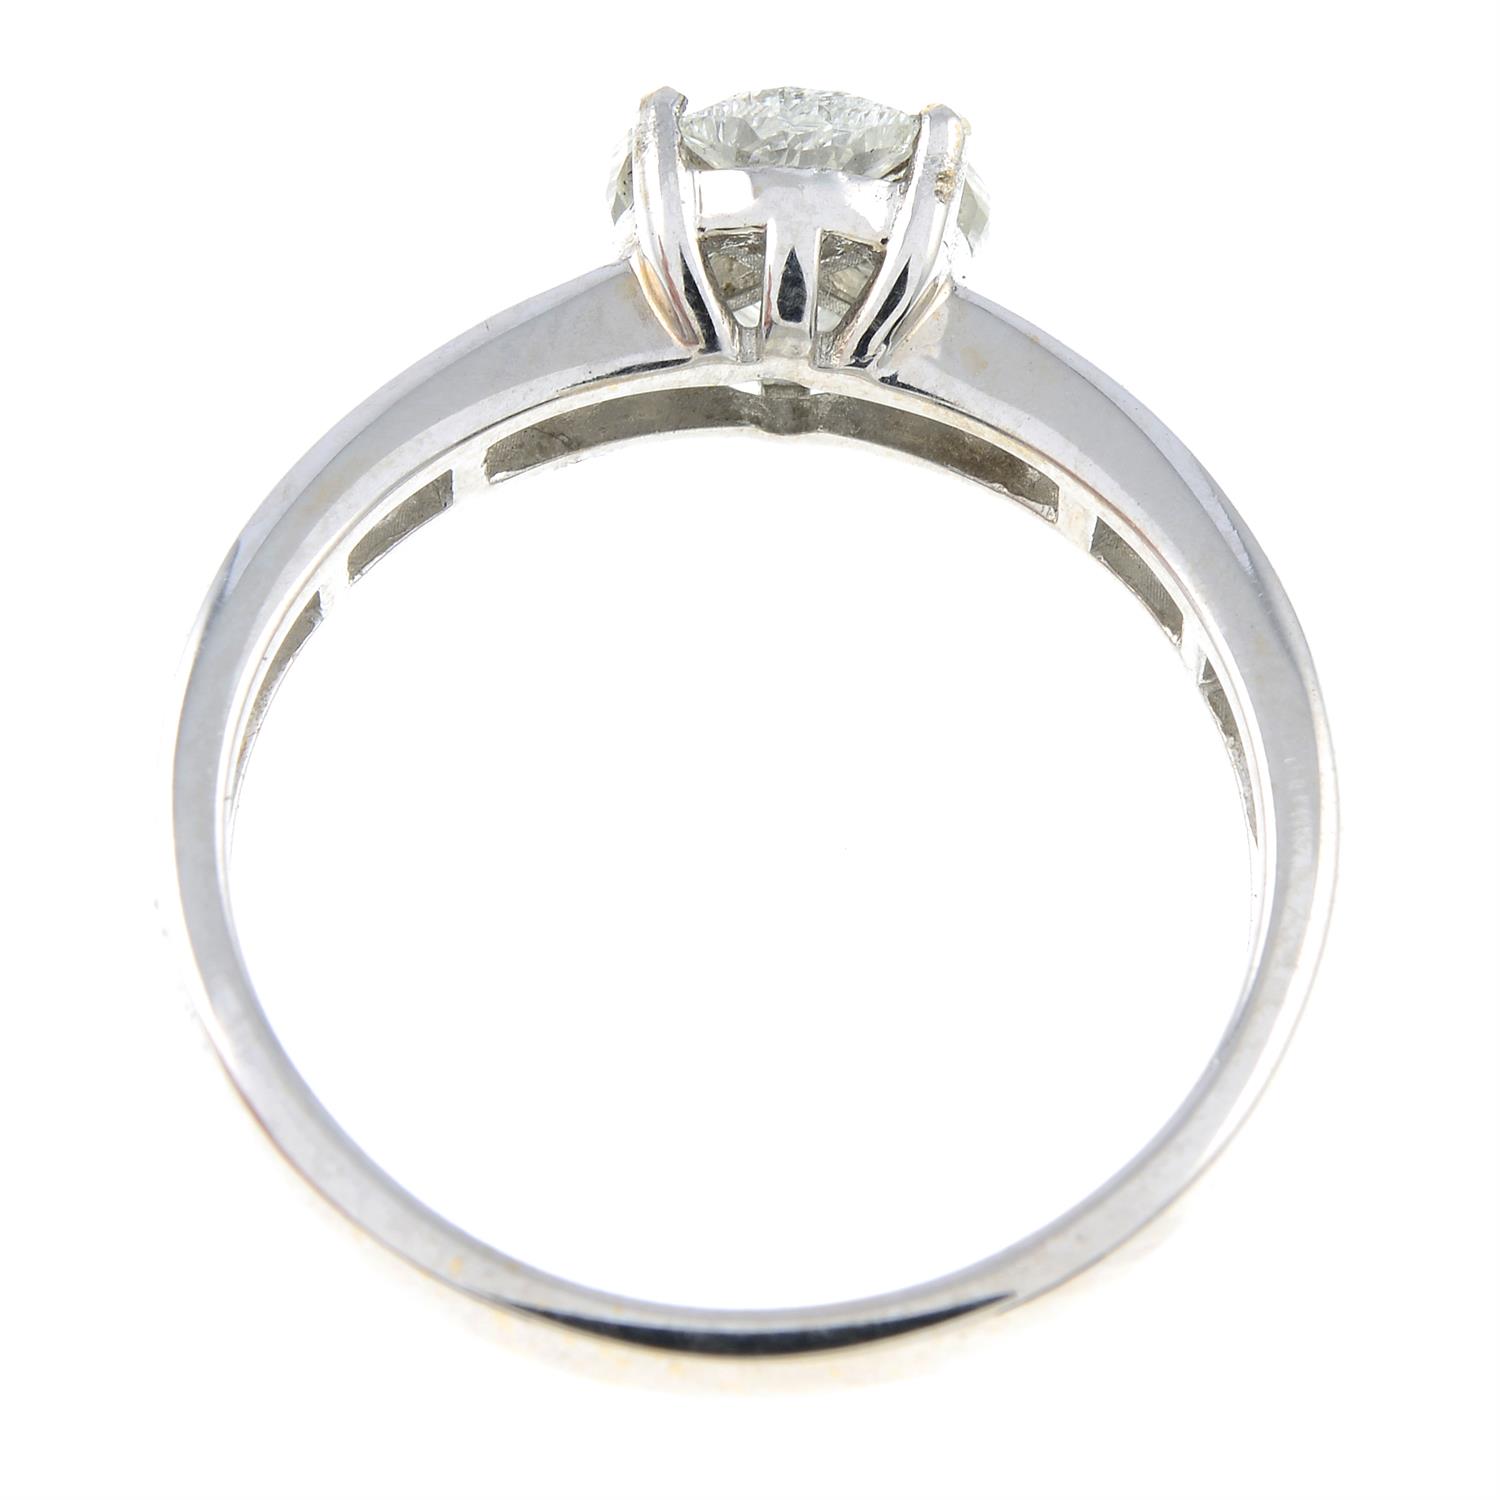 An 18ct gold vari-cut diamond dress ring. - Image 2 of 2